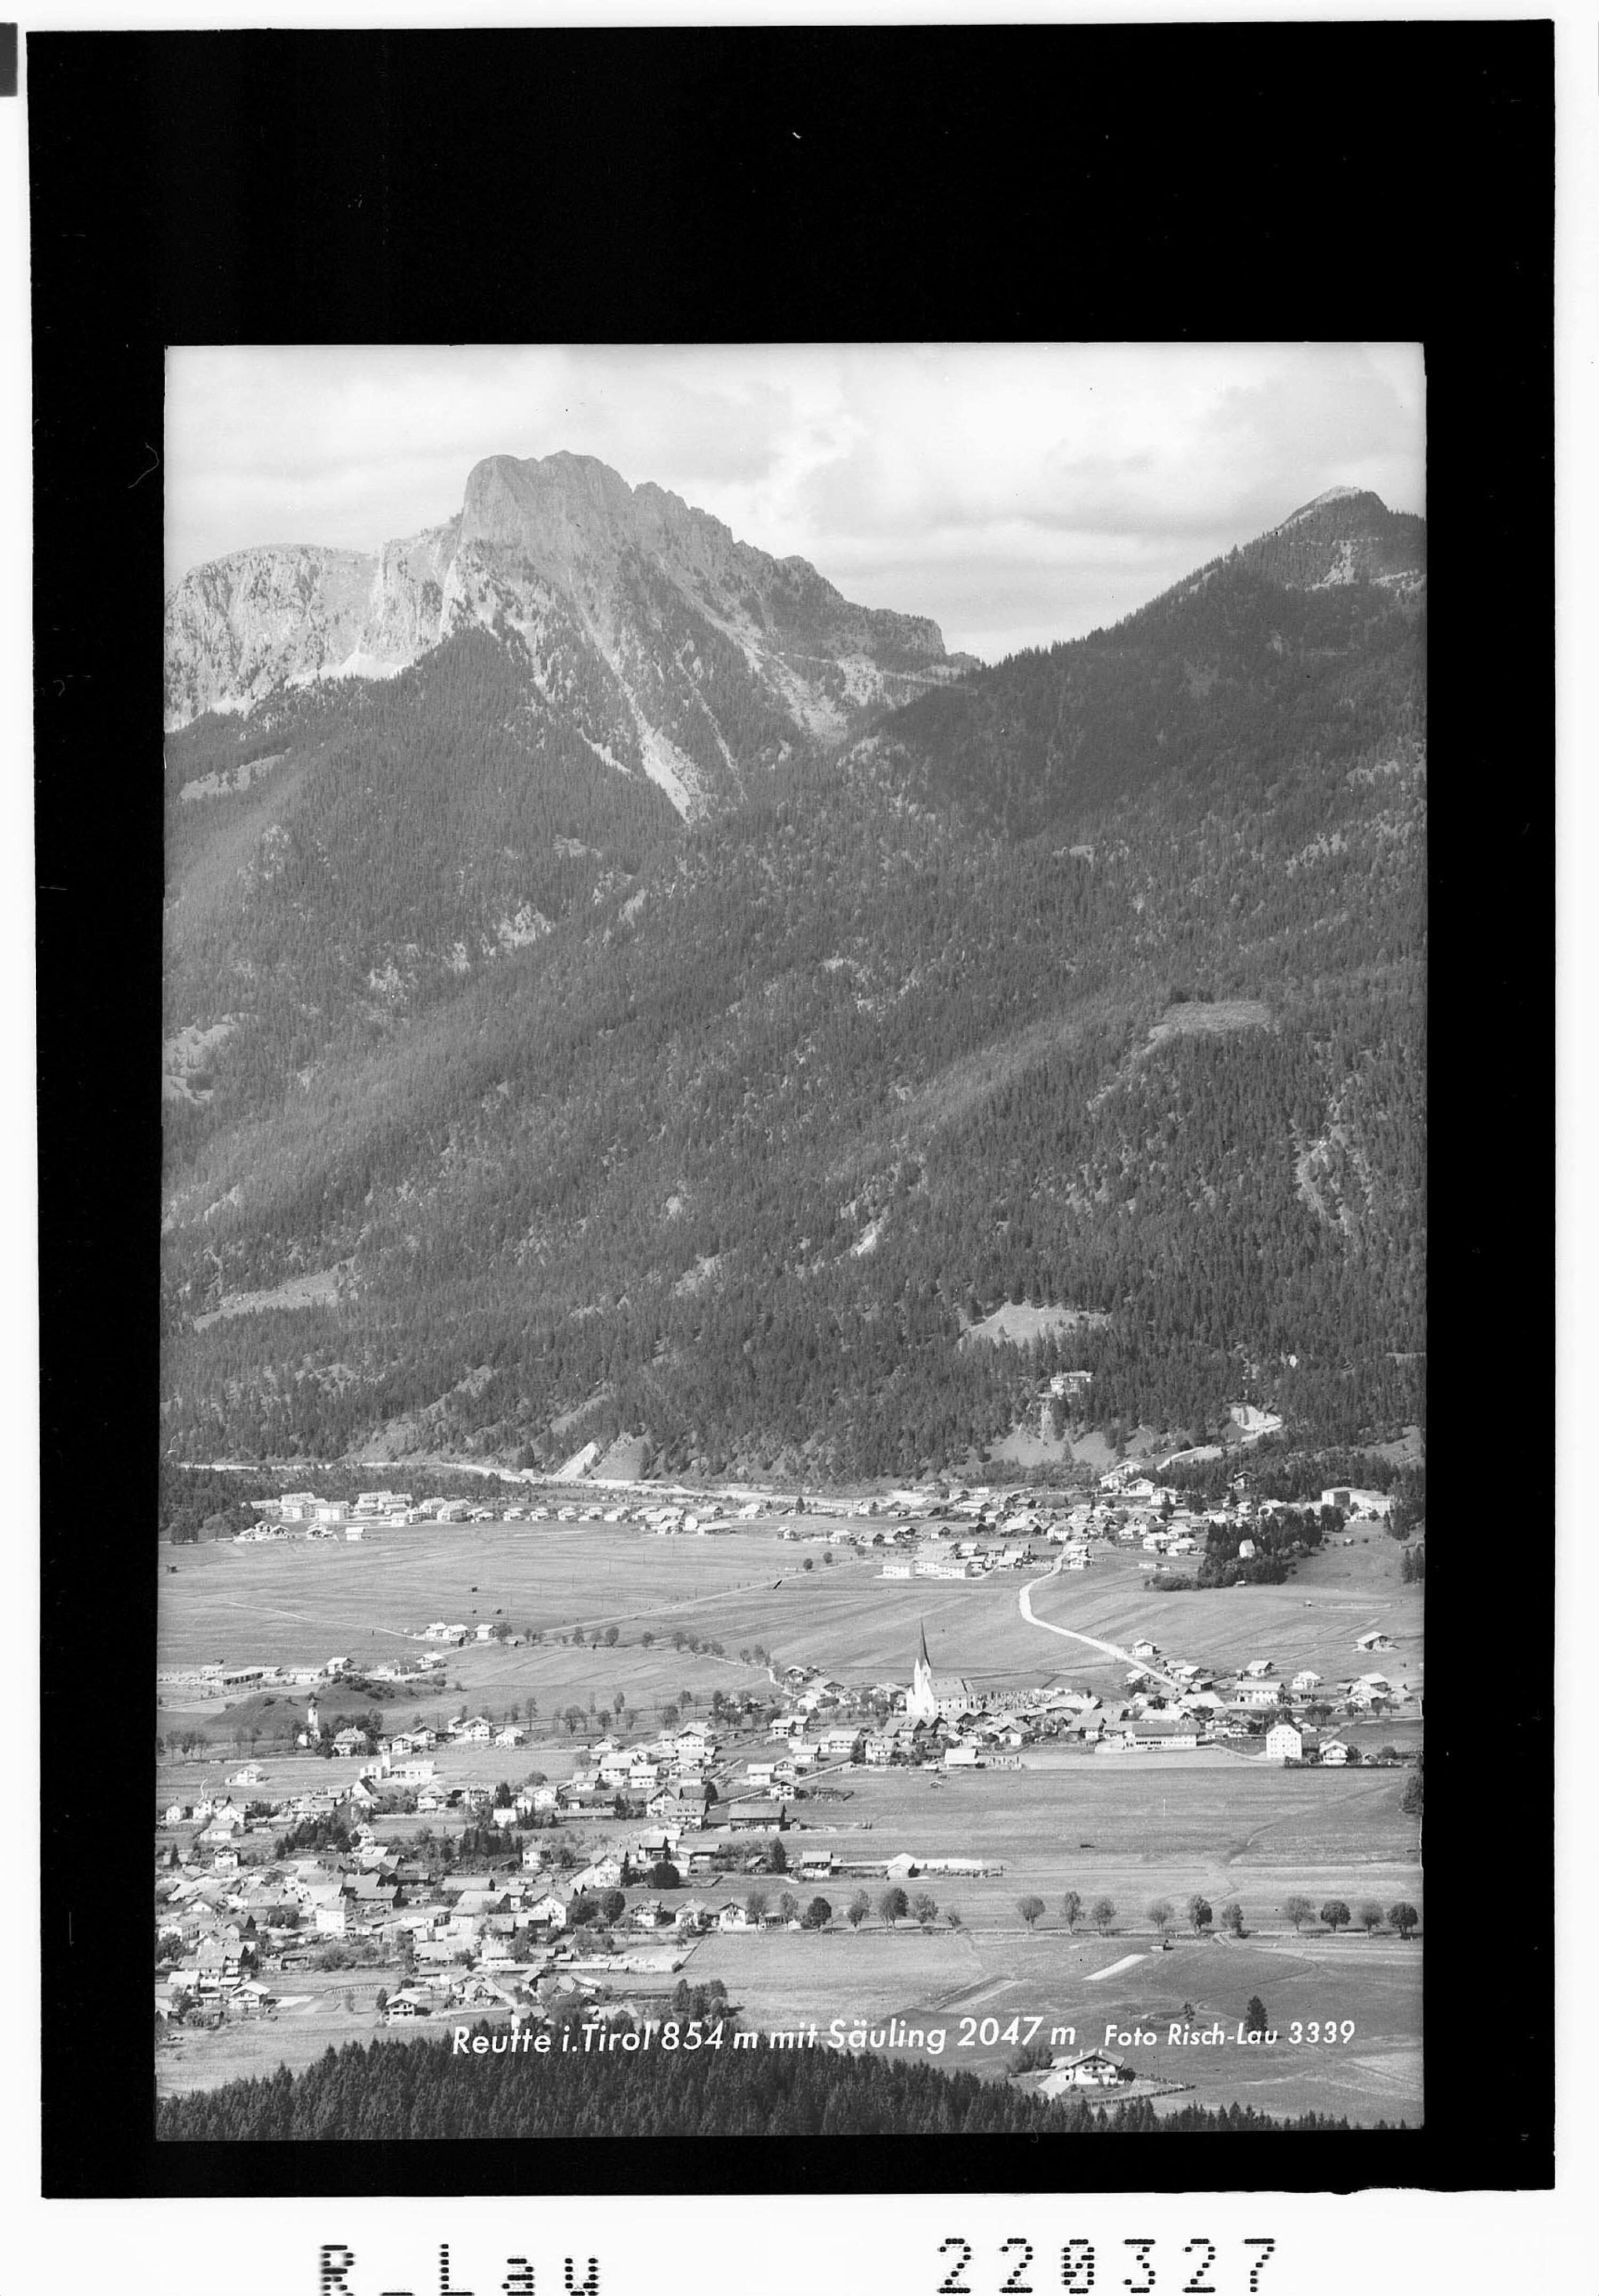 Reutte in Tirol 854 m mit Säuling></div>


    <hr>
    <div class=